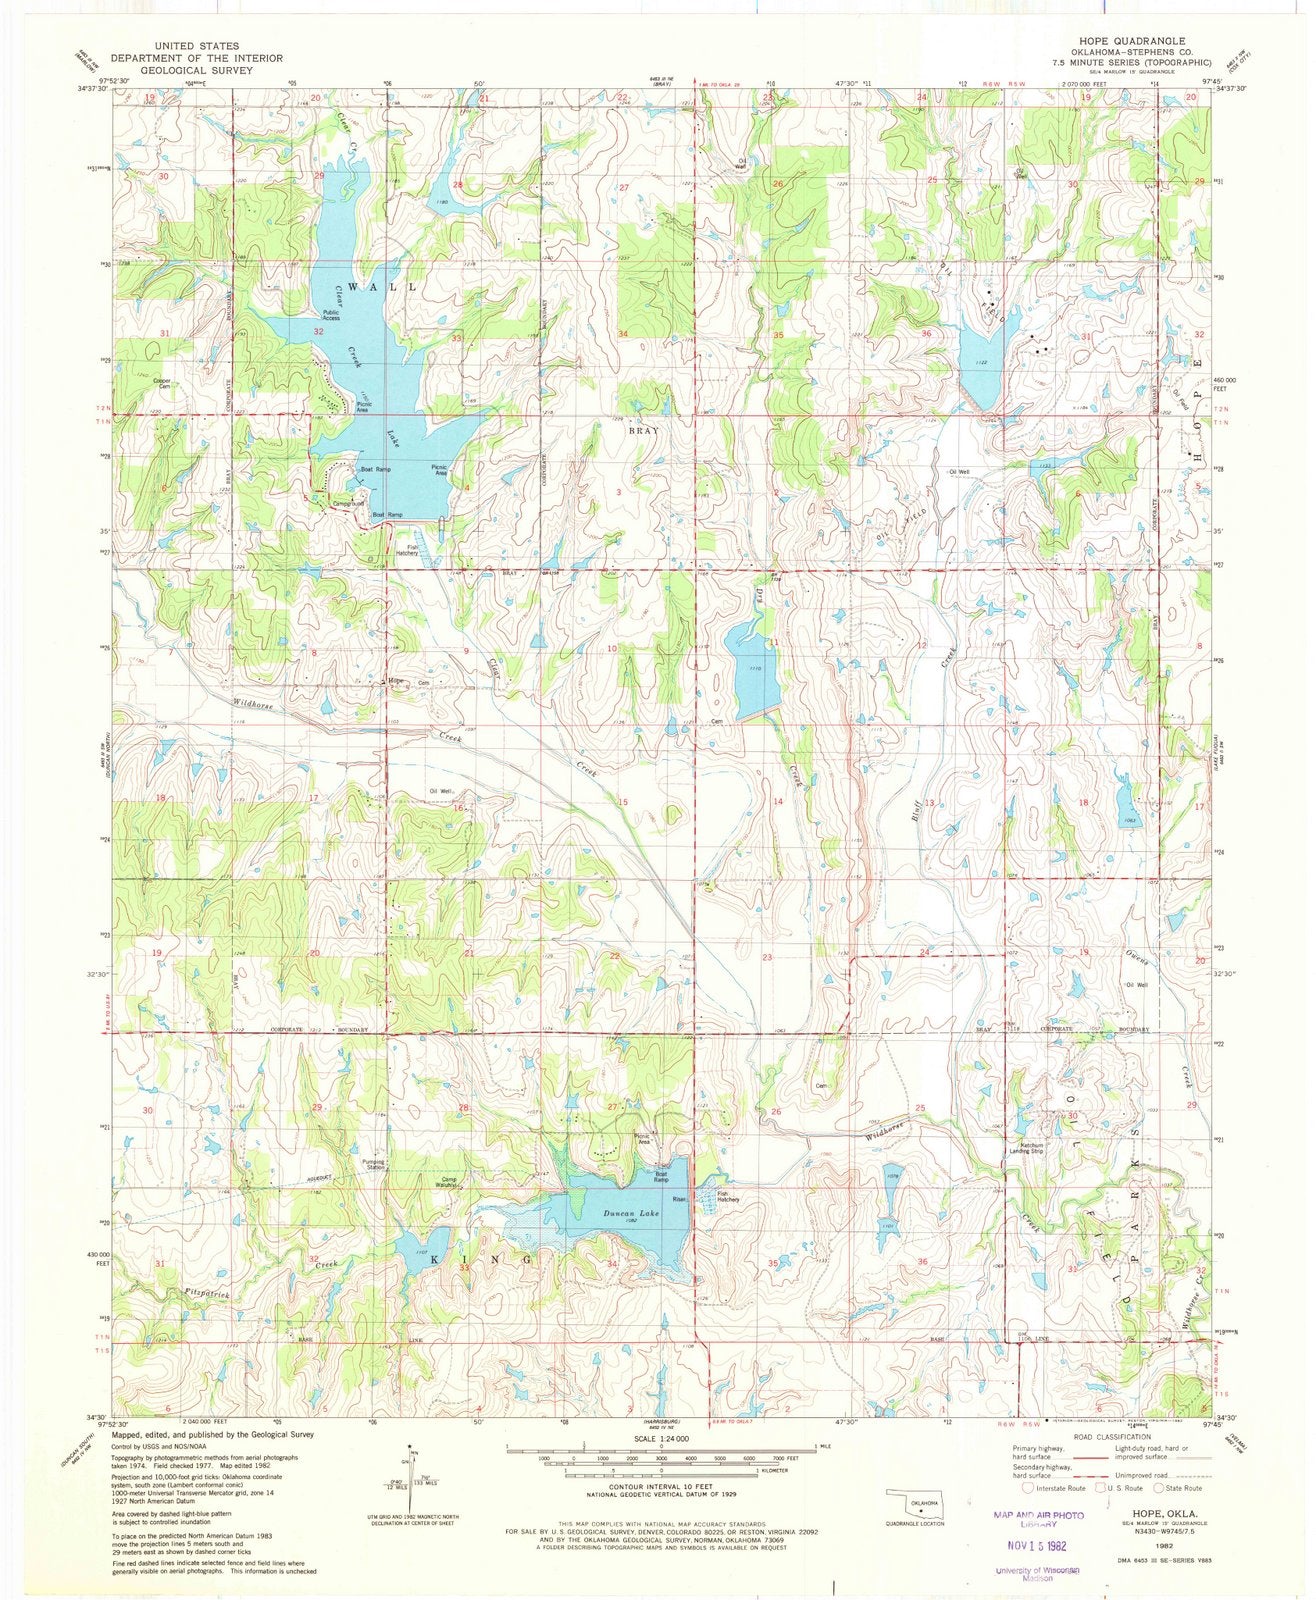 1982 Hope, OK - Oklahoma - USGS Topographic Map